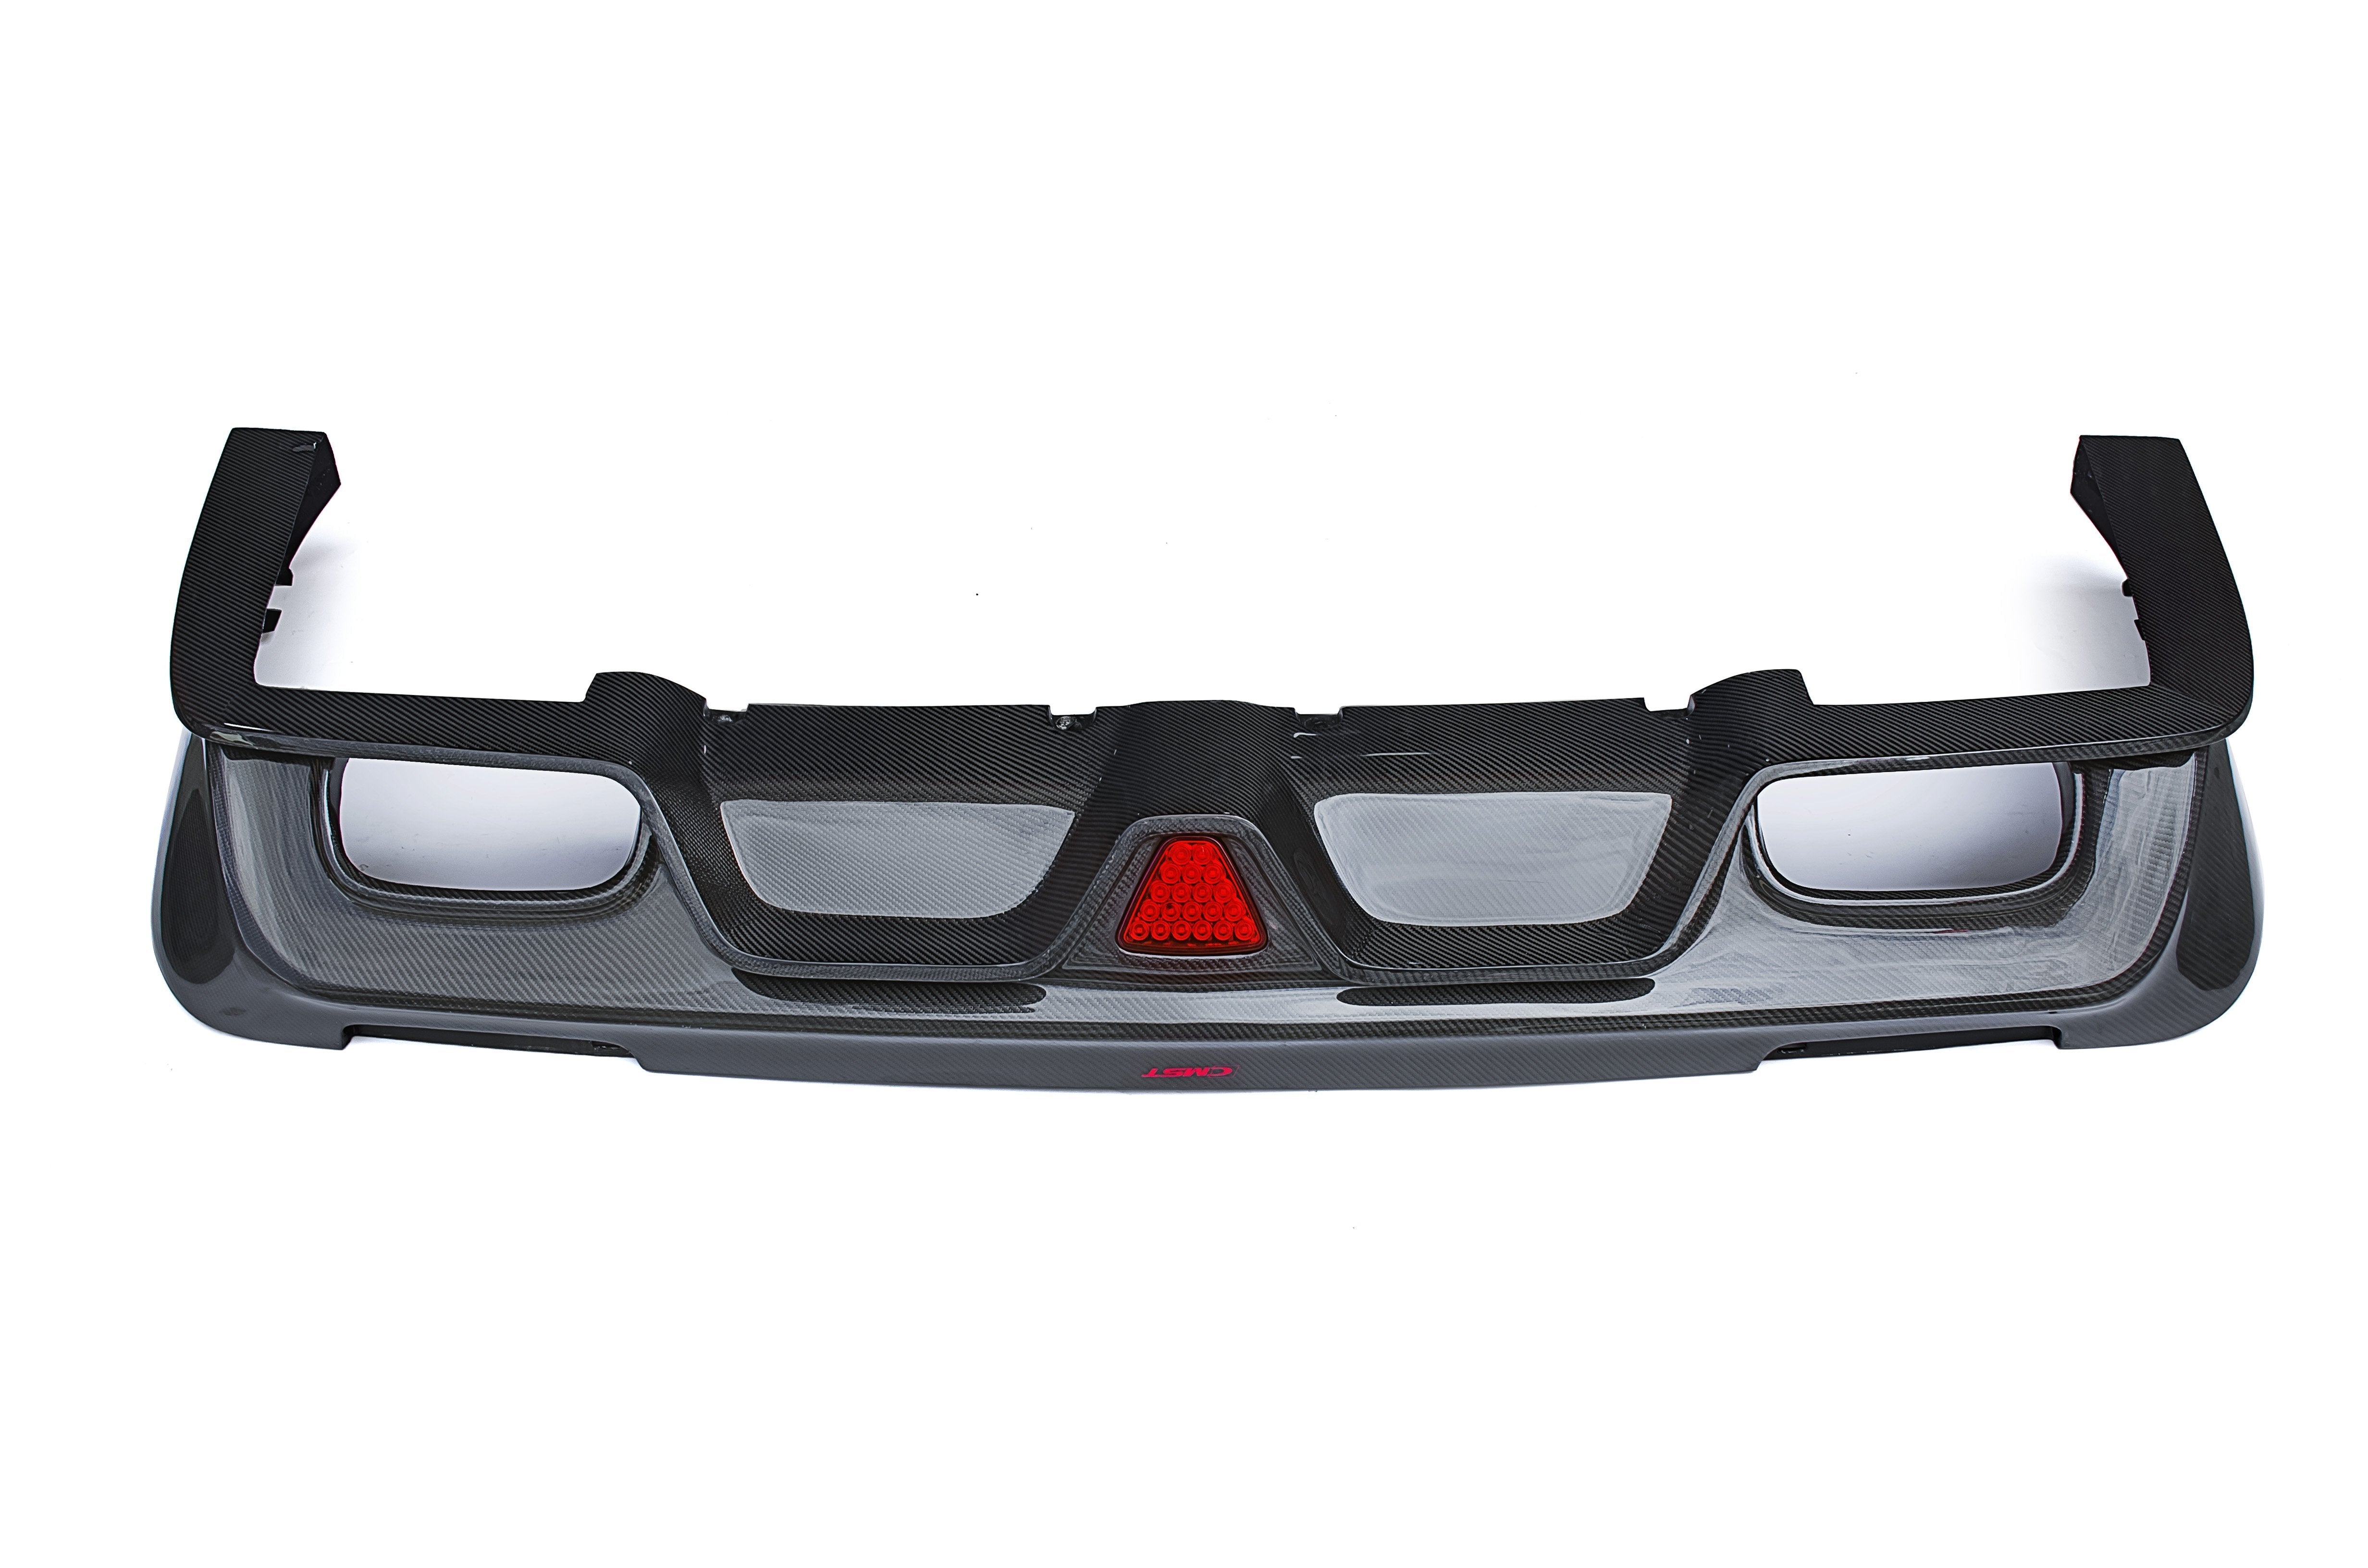 CMST Tuning Carbon Fiber Rear Diffuser for Dodge Challenger 2015-ON